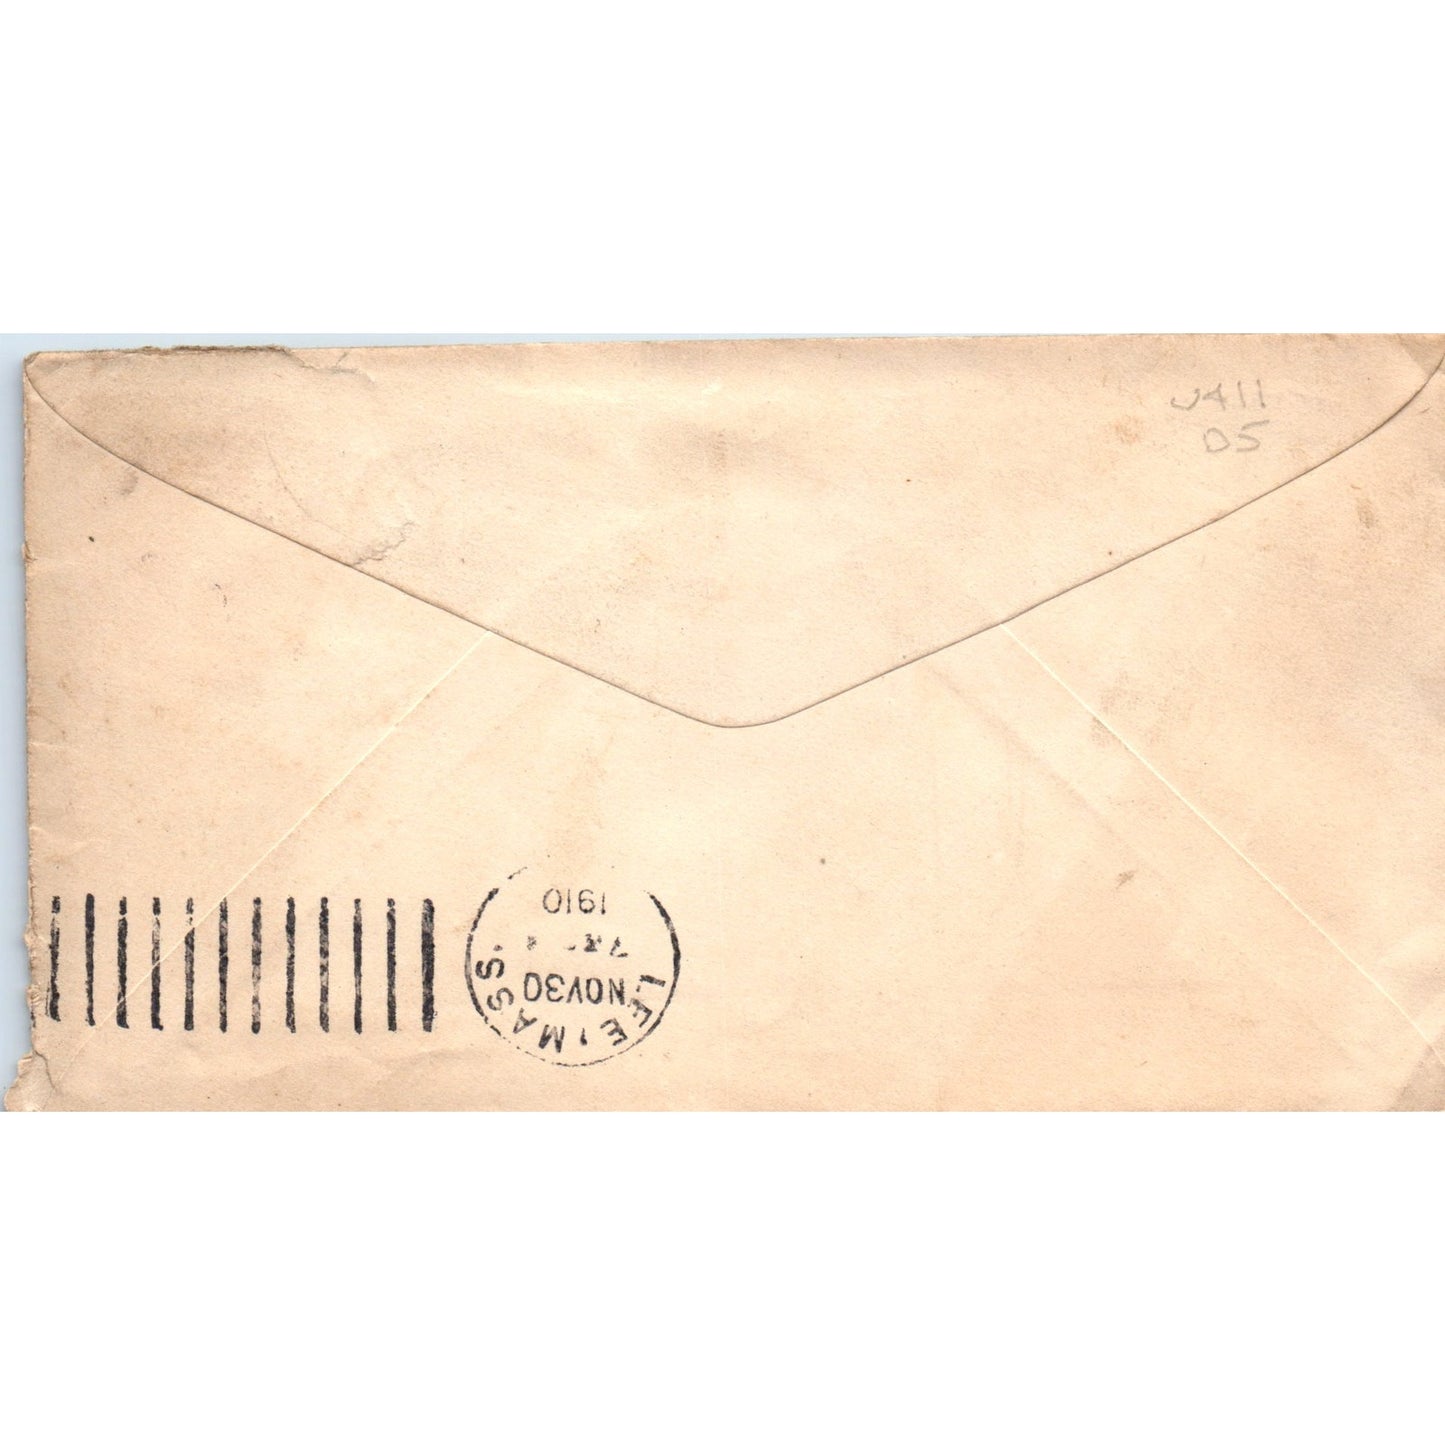 1910 White Marble & Terrazzo Co Lee MA Postal Cover Envelope TG7-PC2